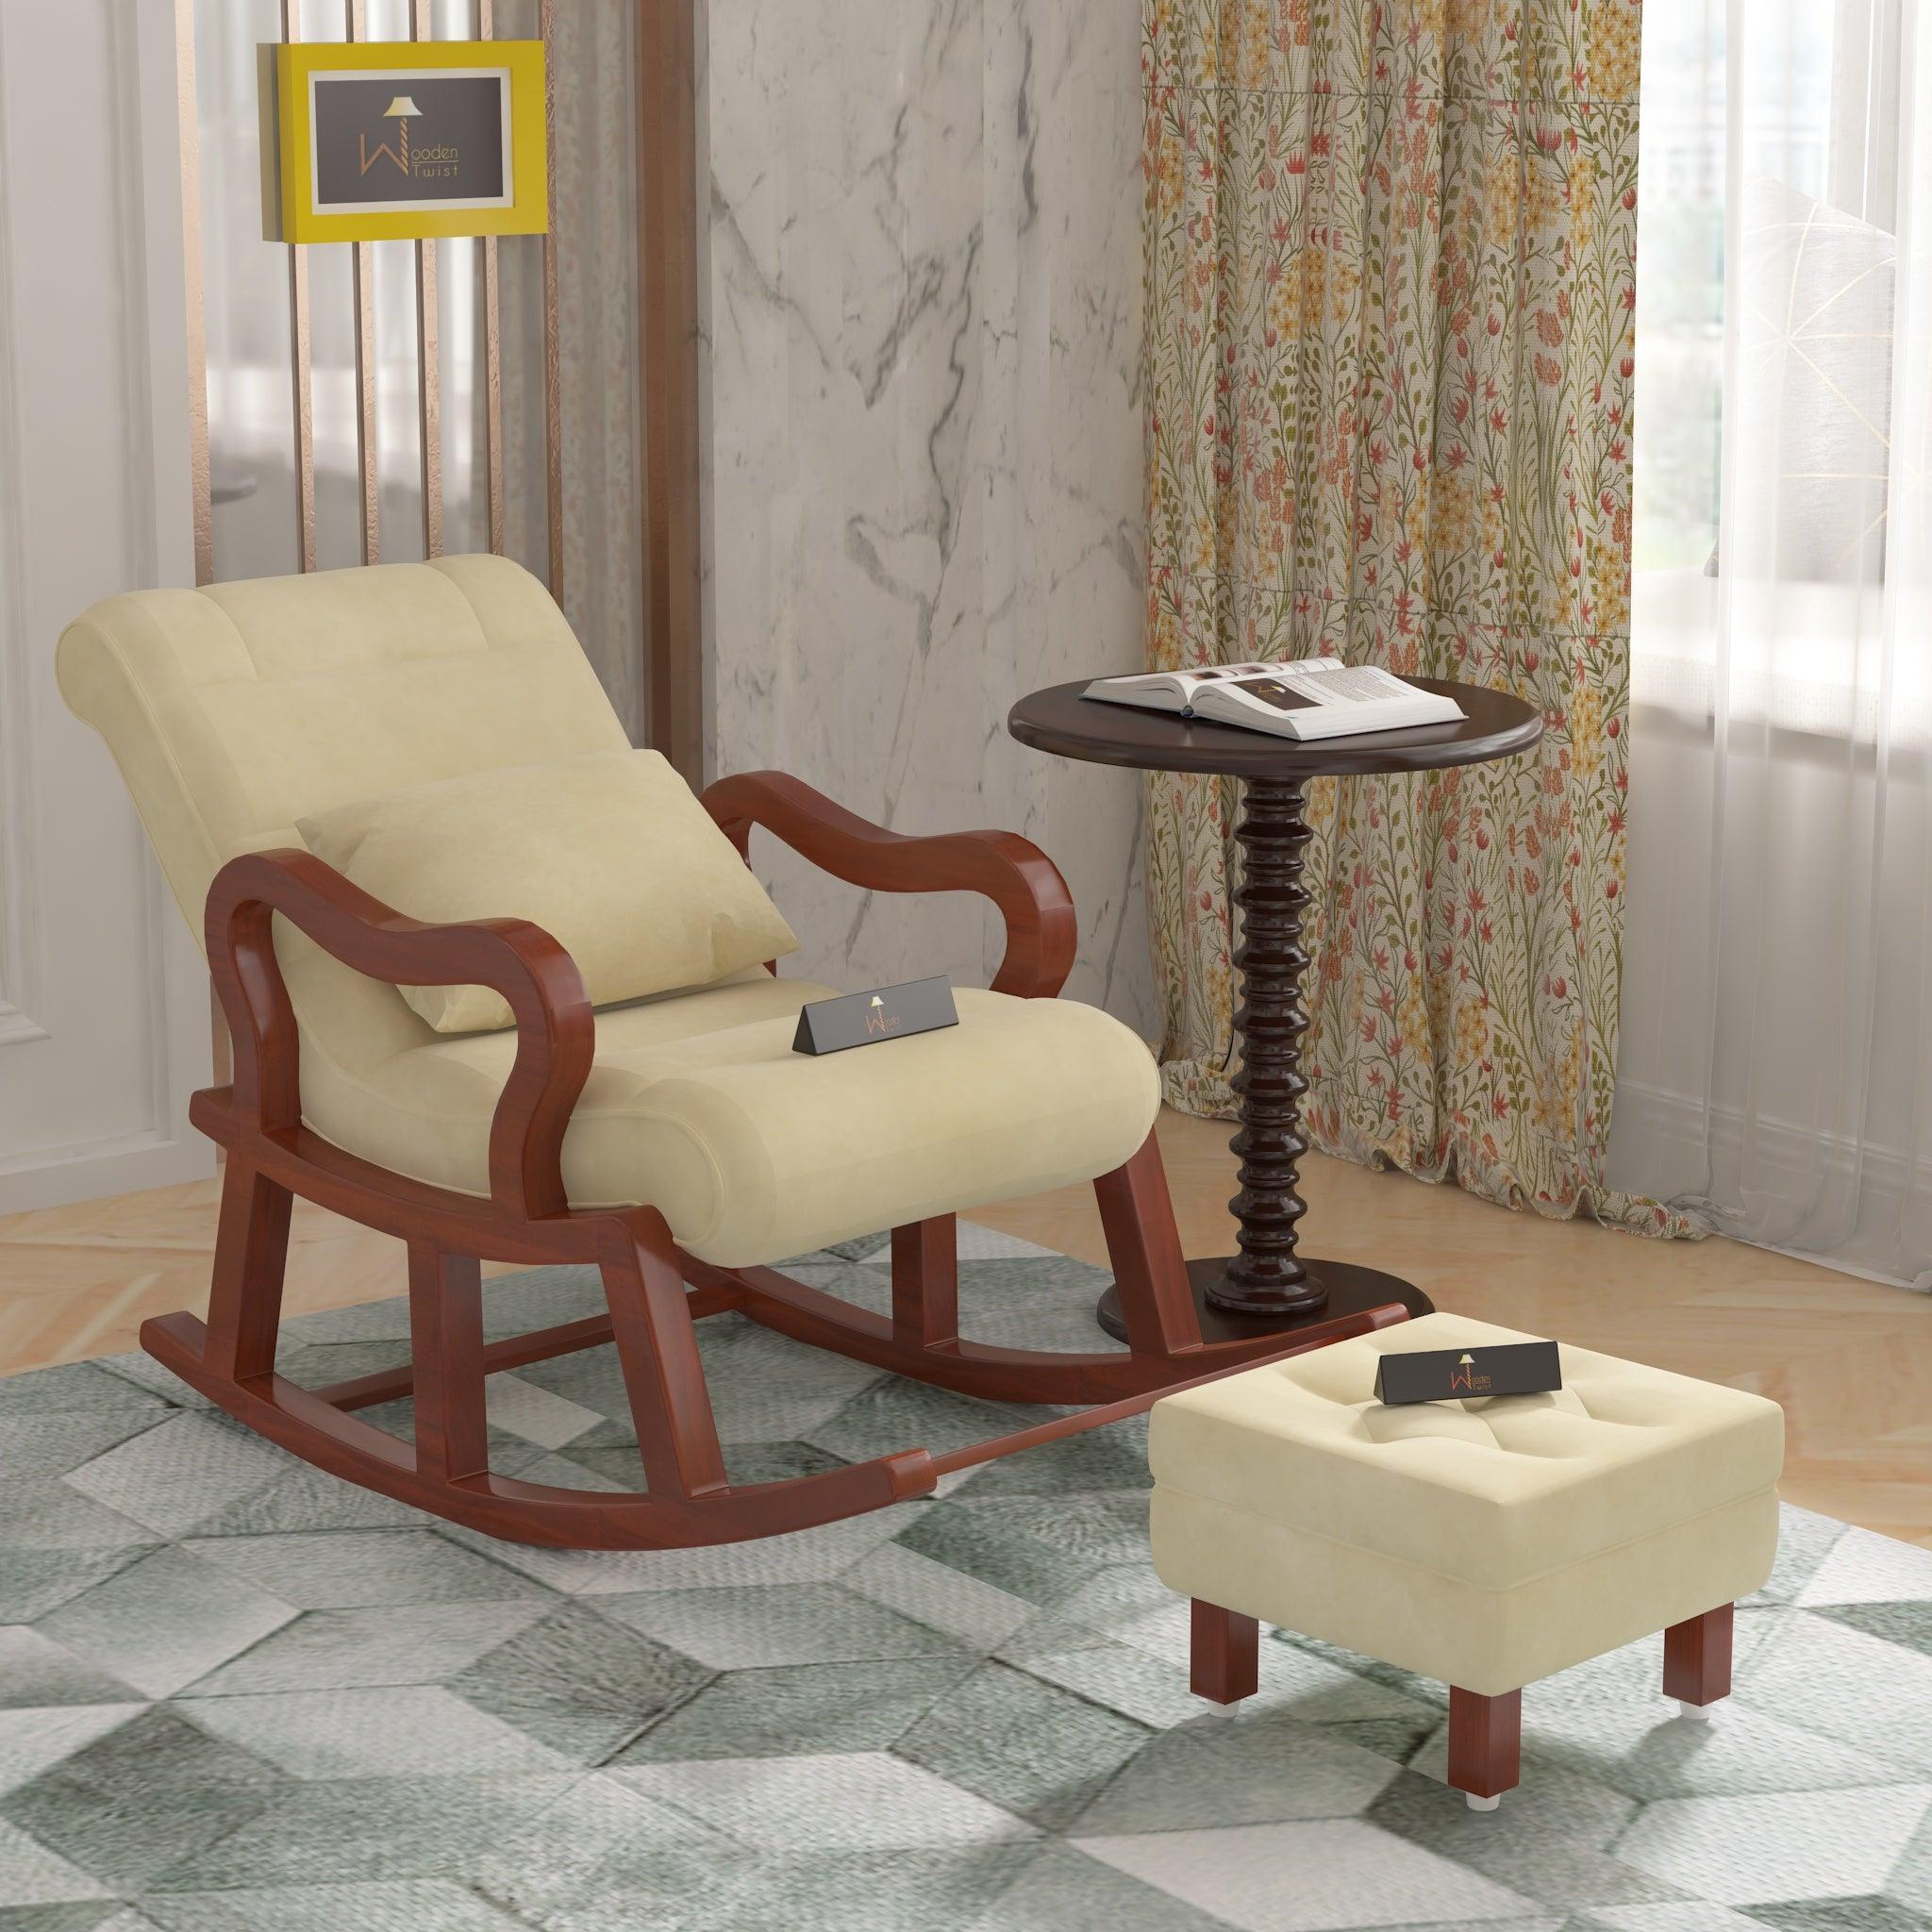 Recliner Wooden Rocking Chair with Footrest - Wooden Twist UAE